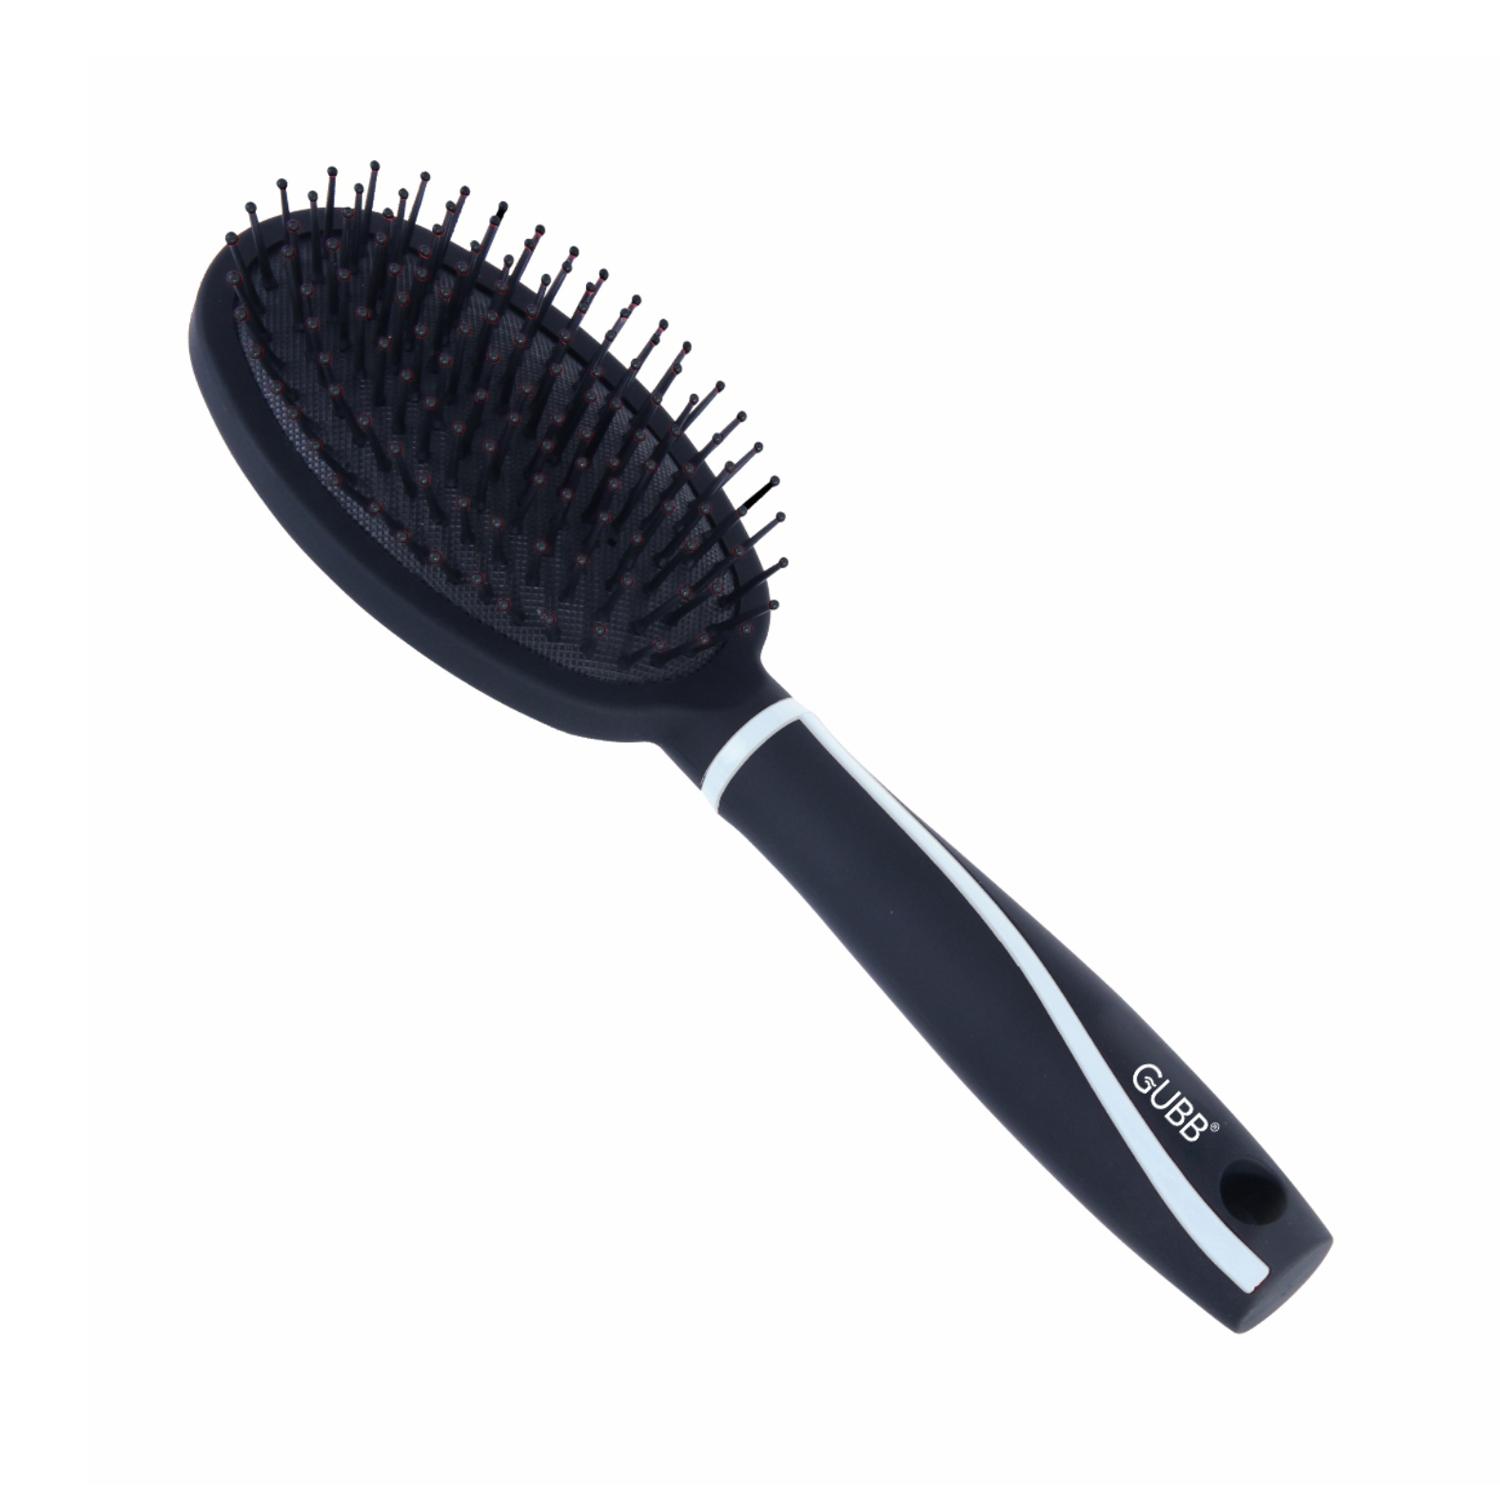 GUBB | GUBB Oval Hair Brush - Vogue Range (120g)